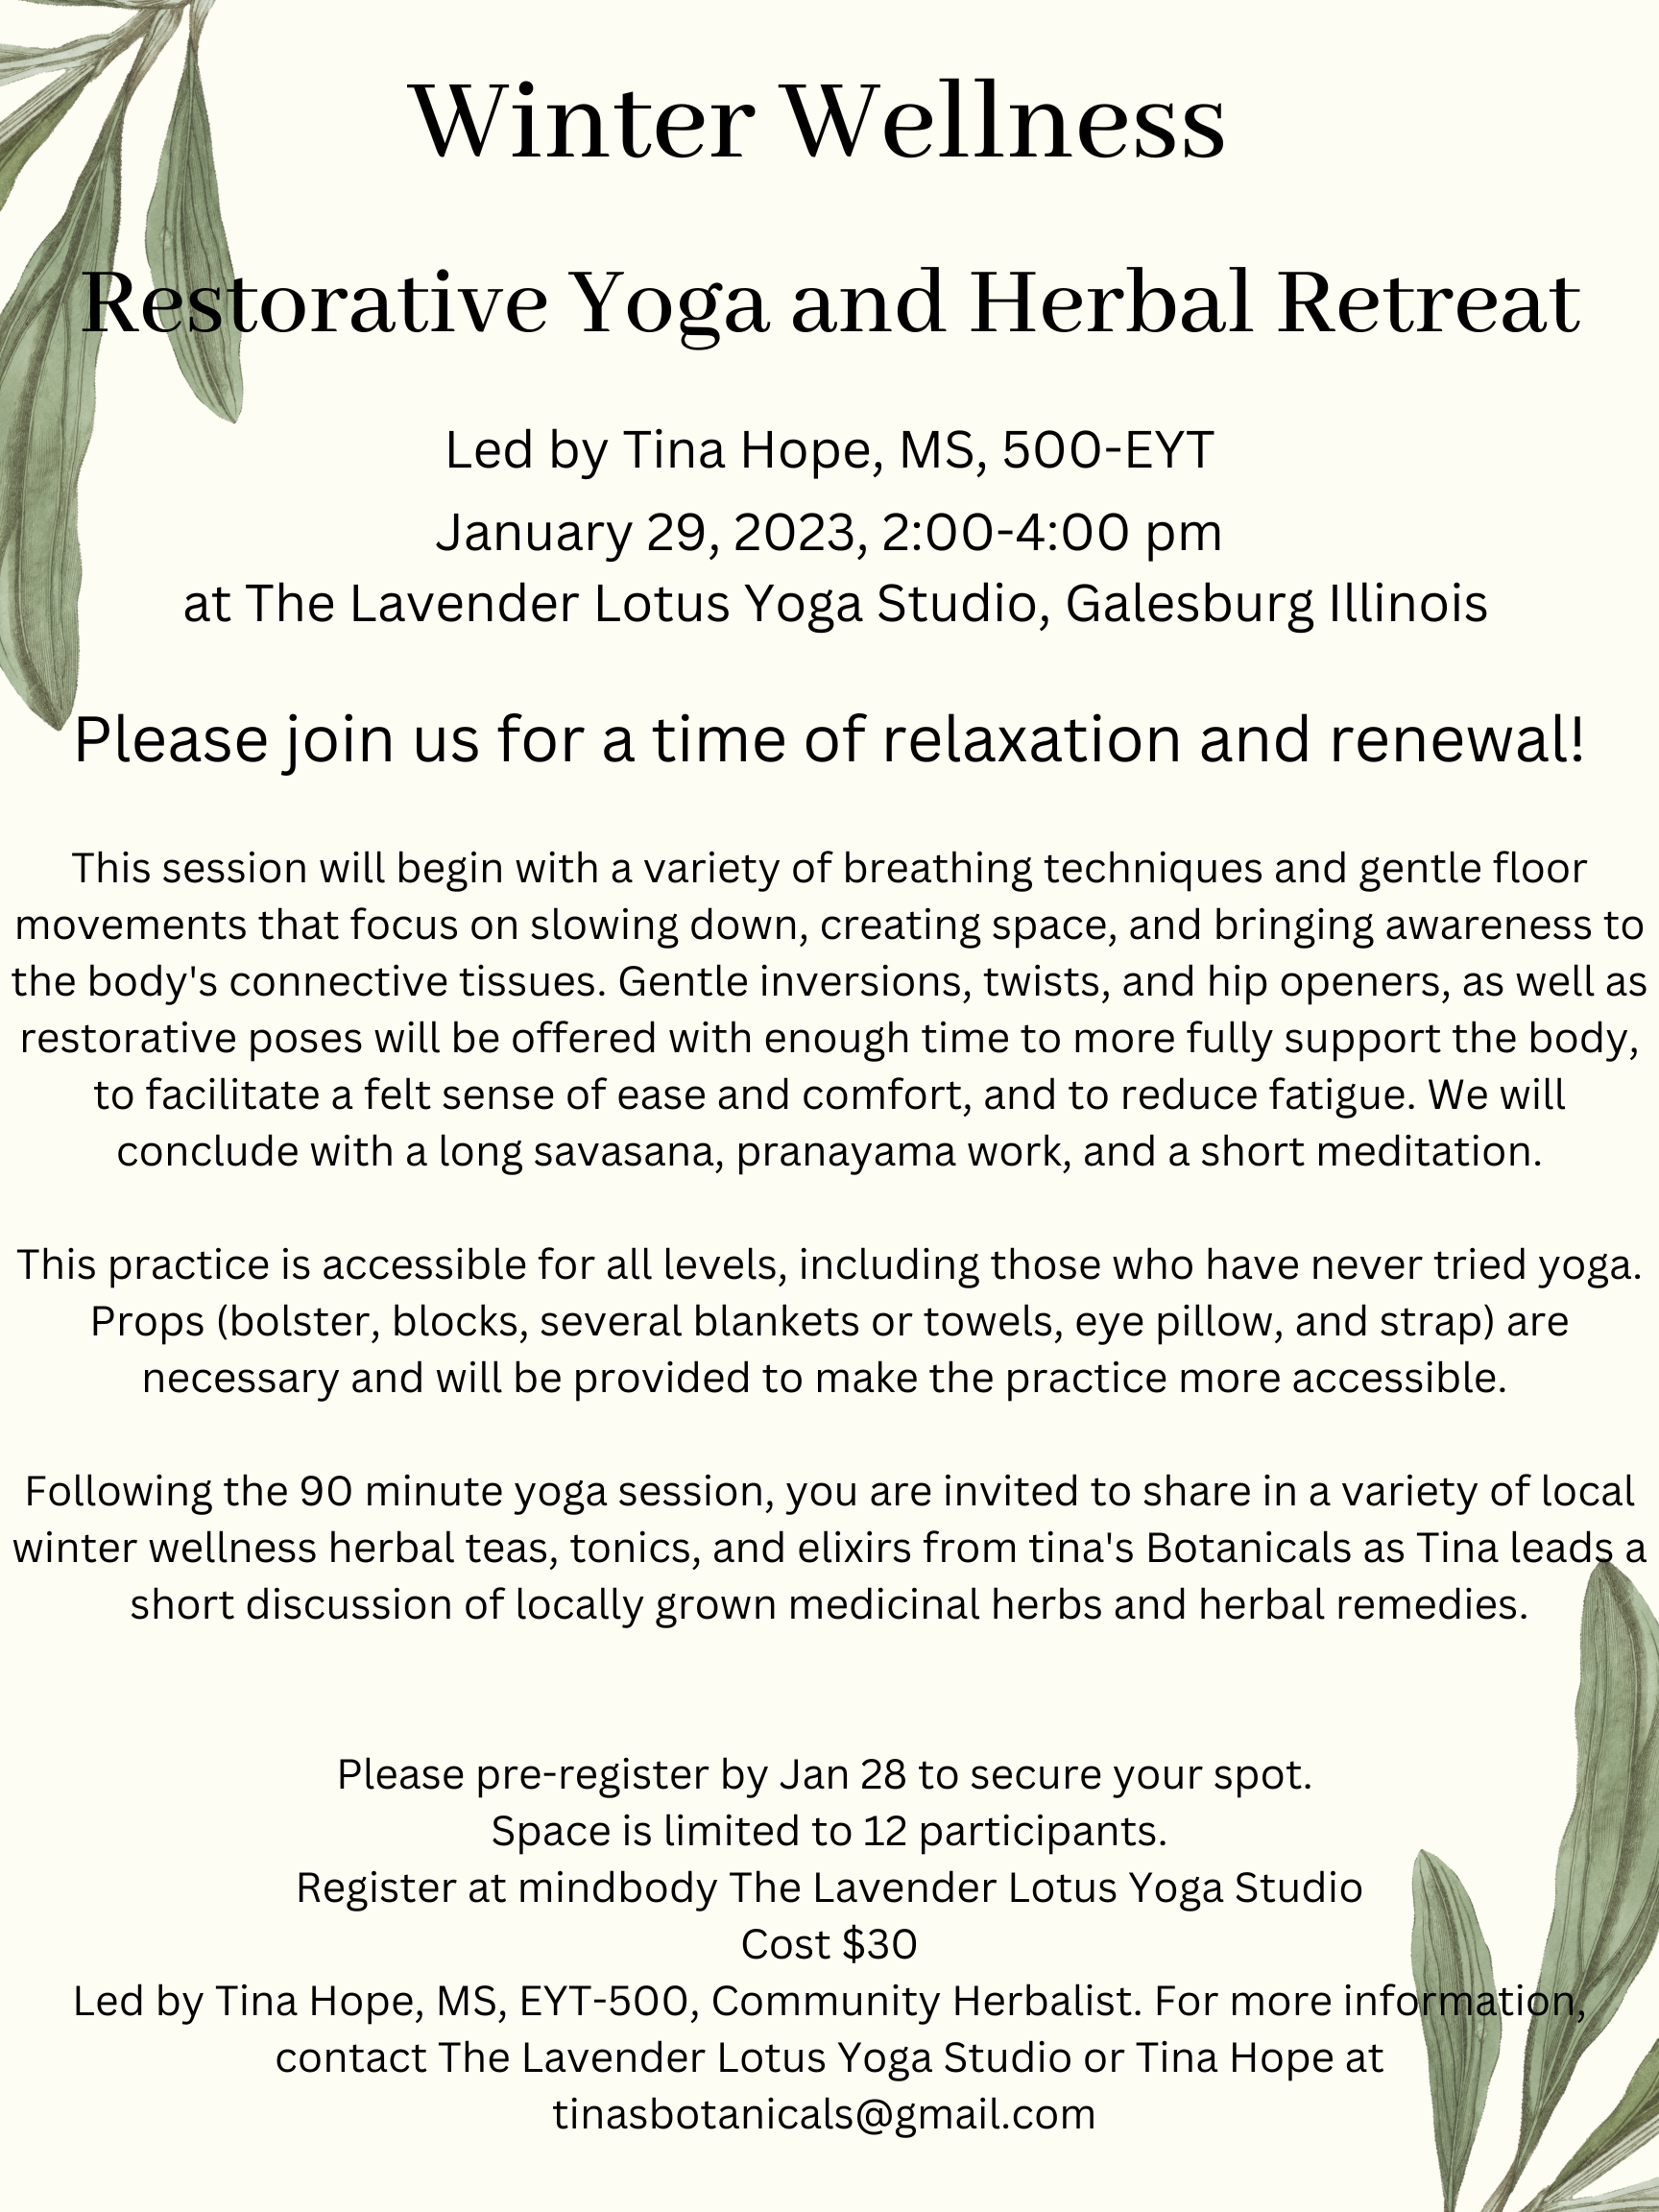 Winter Wellness Yoga Retreat Jan 29